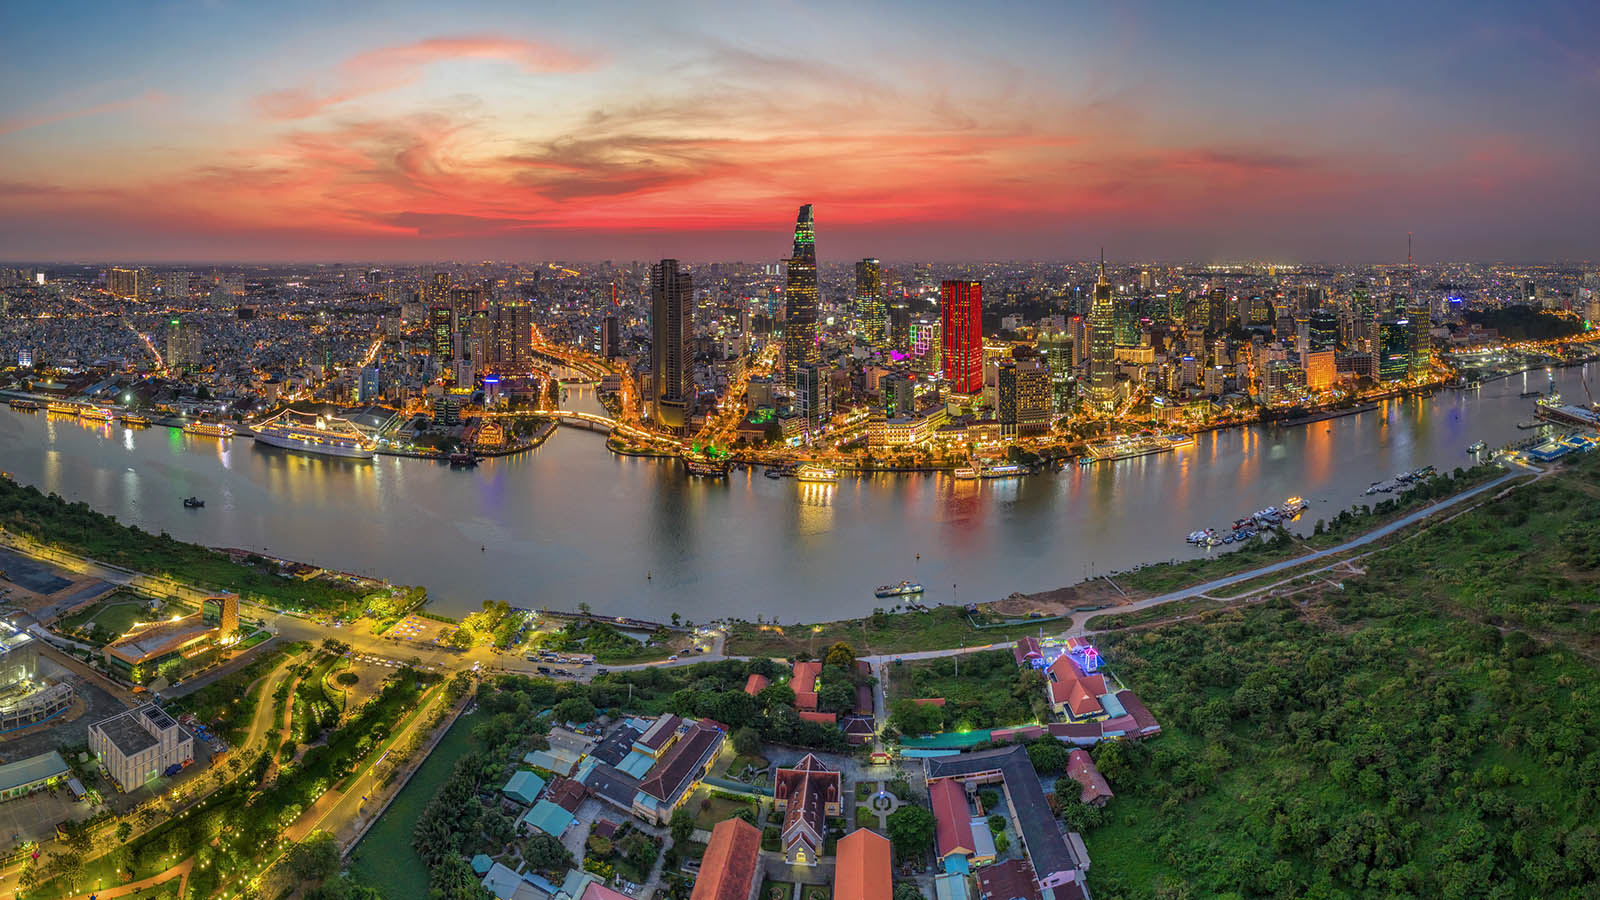 Ho Chi Minh City or Saigon is made of modernity and tradition